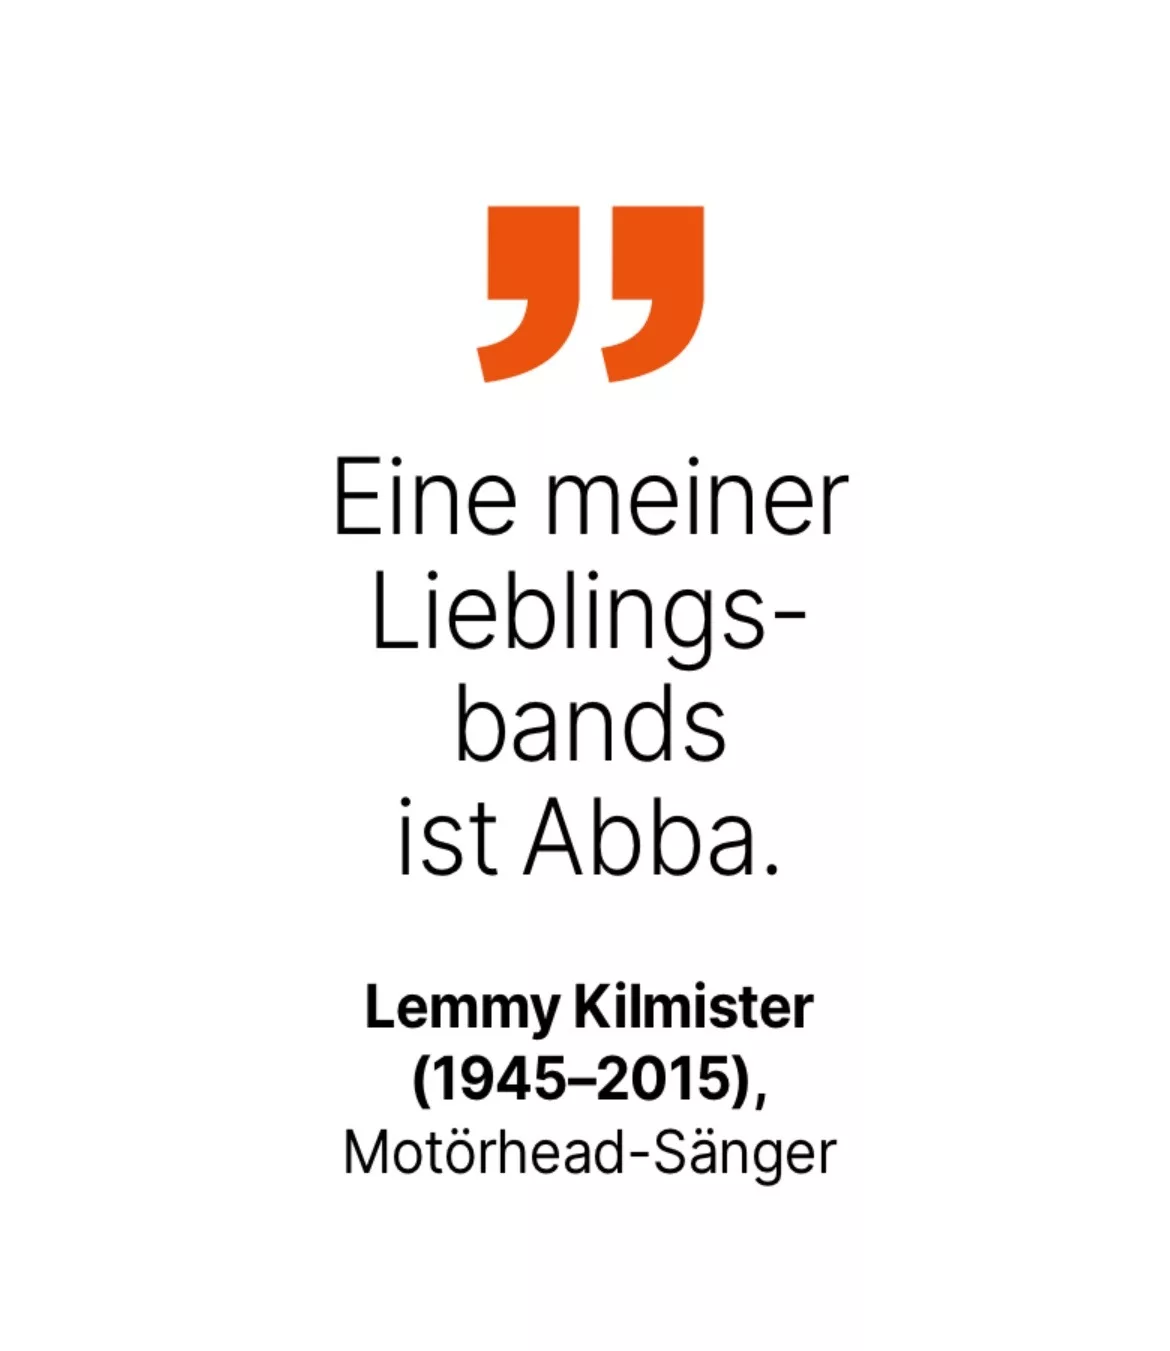 Lemmy Kilmister (1945-2015), Motörhead-Sänger: Eine meiner Lieblings-bands ist Abba.